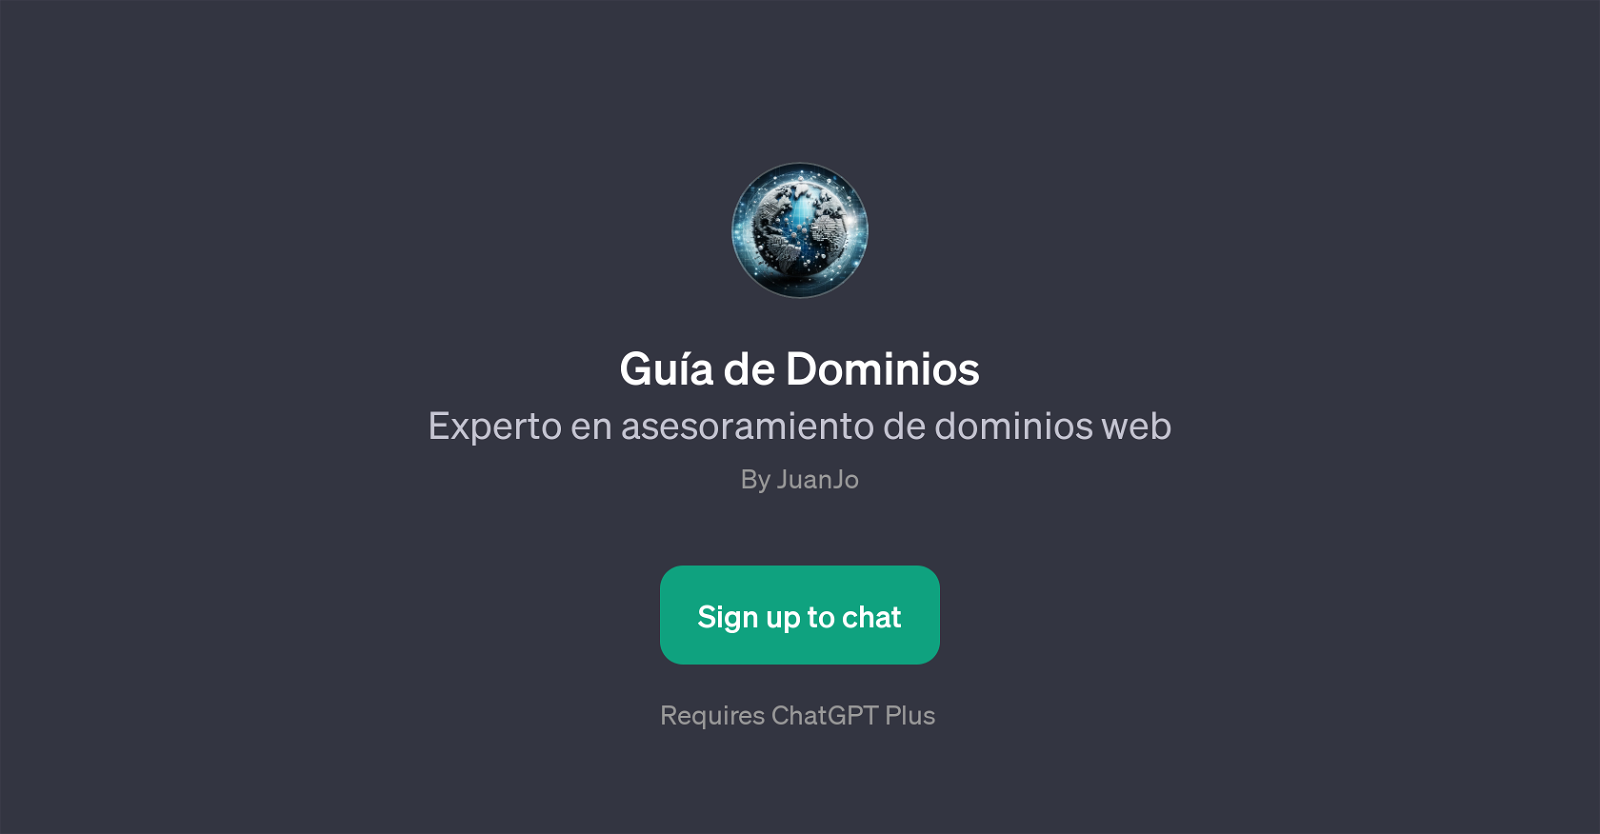 Gua de Dominios website